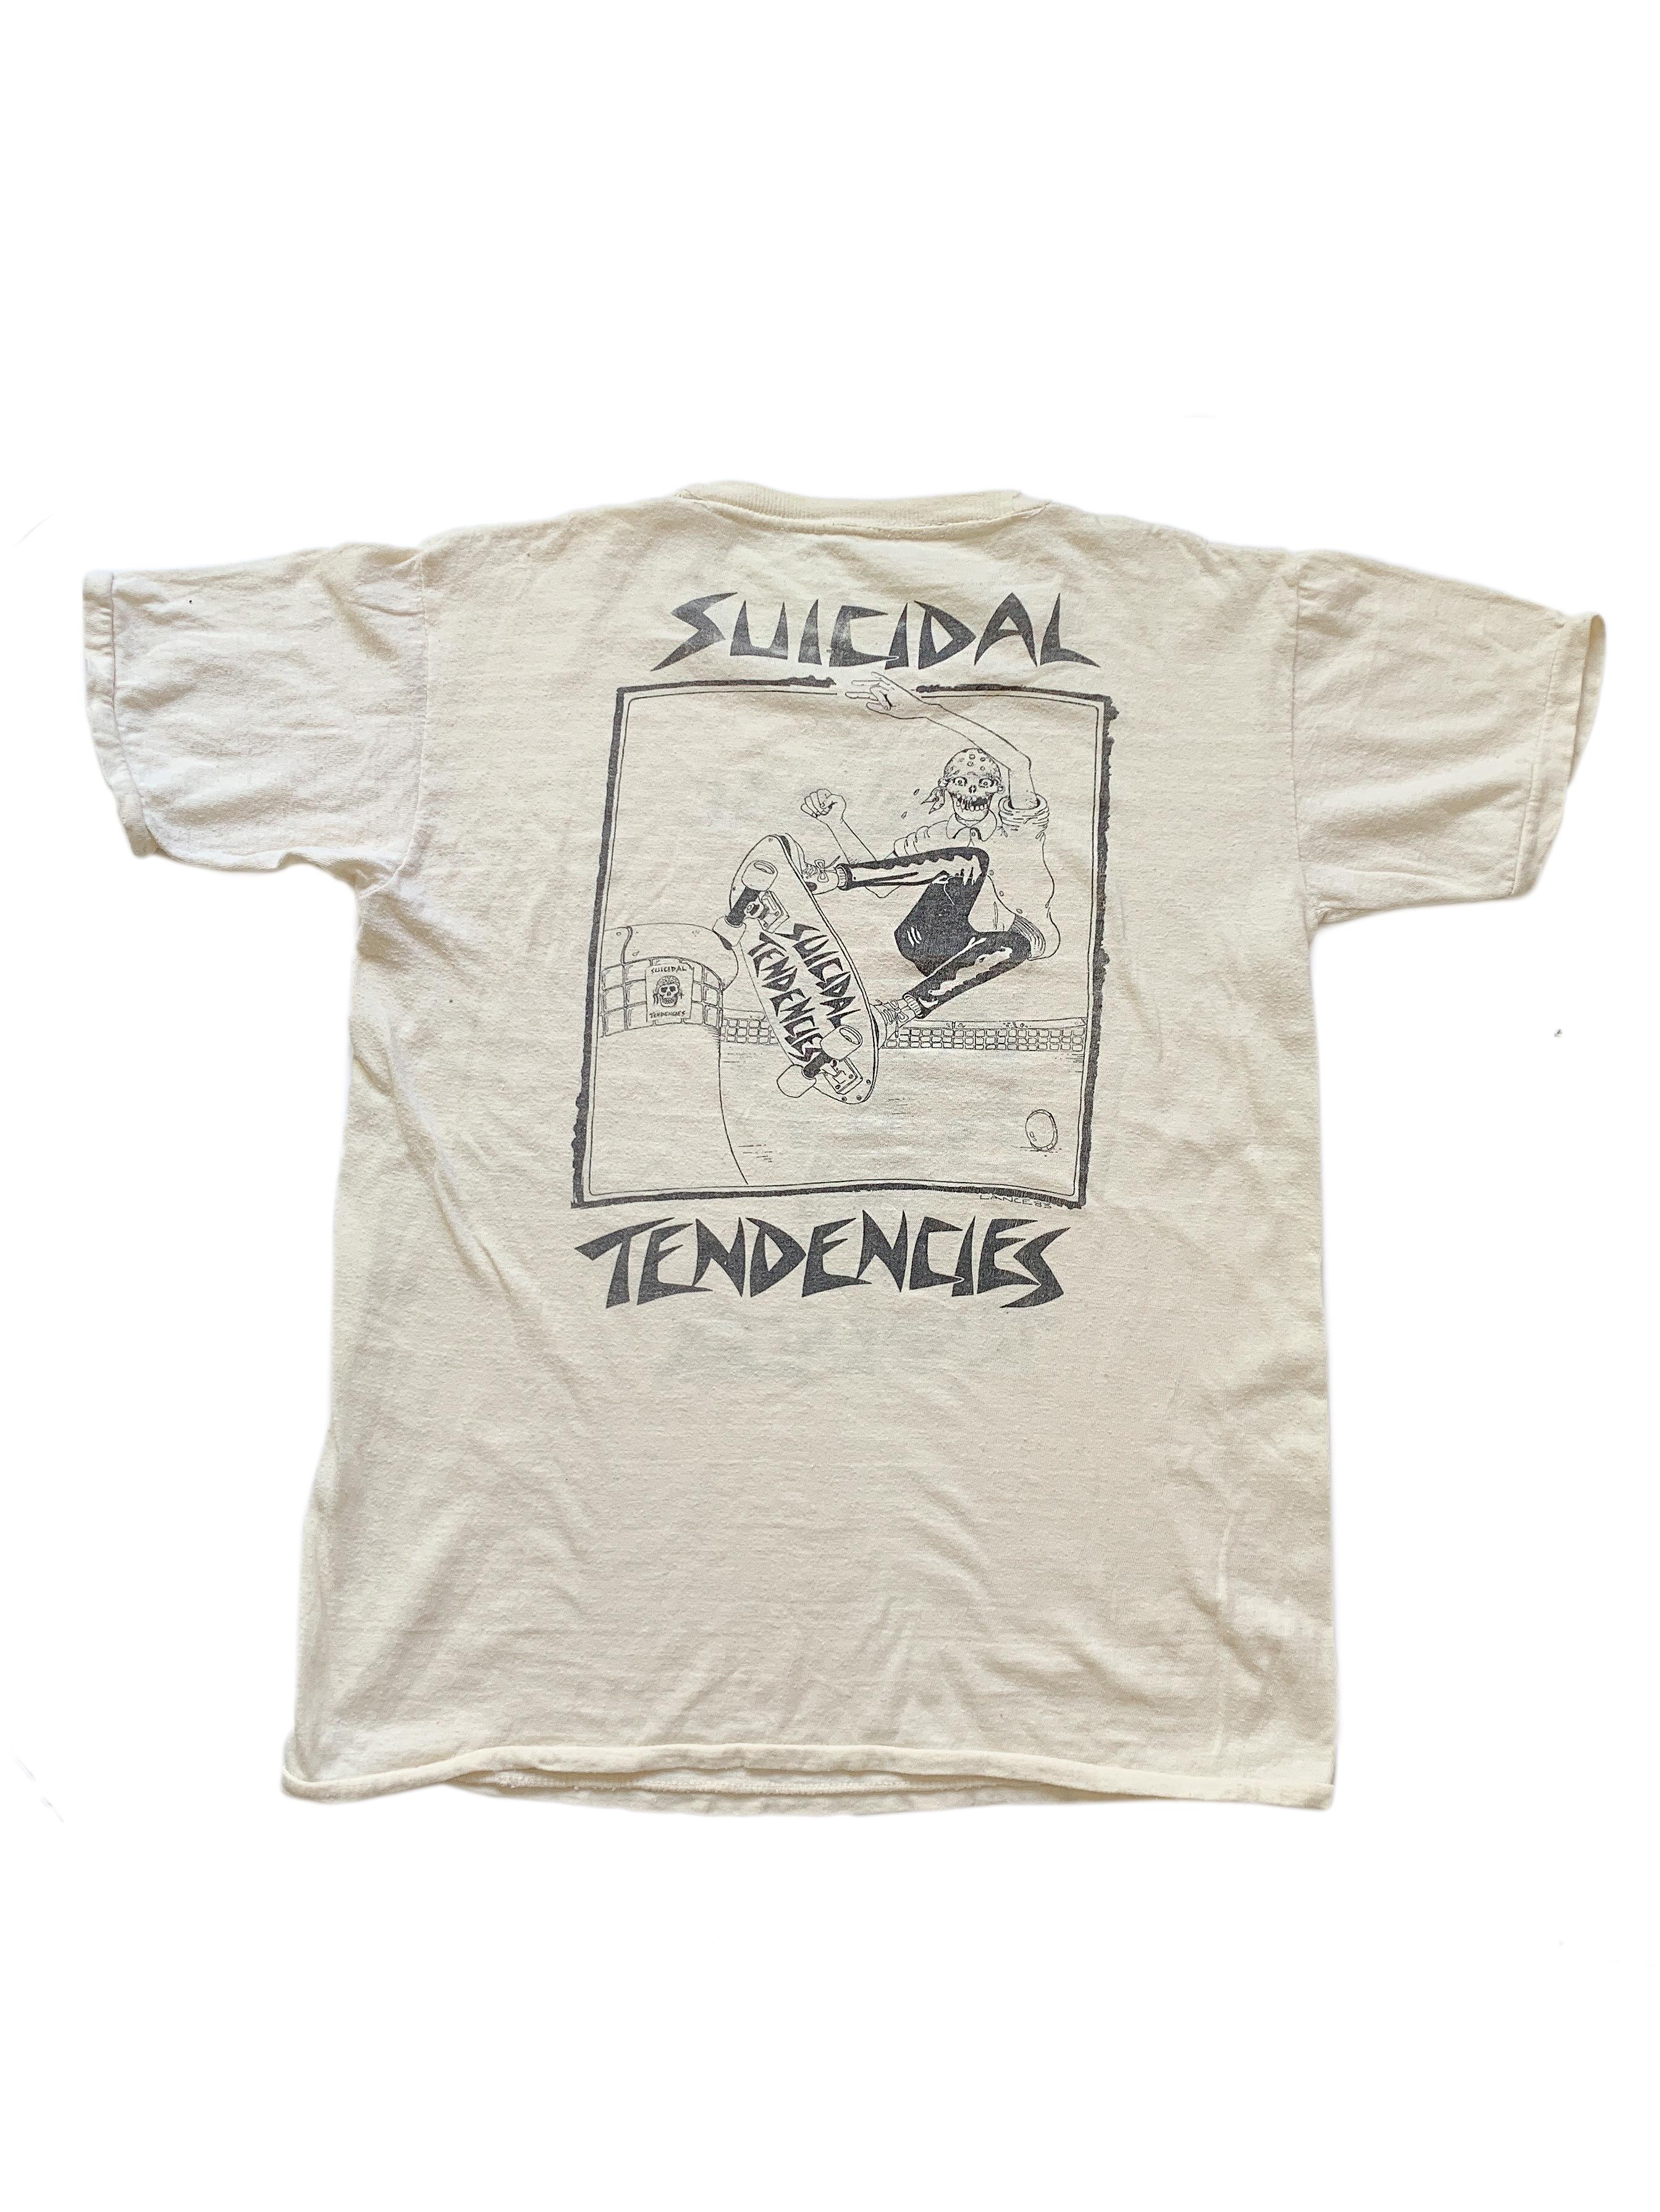 suicidal tendencies vintage shirt